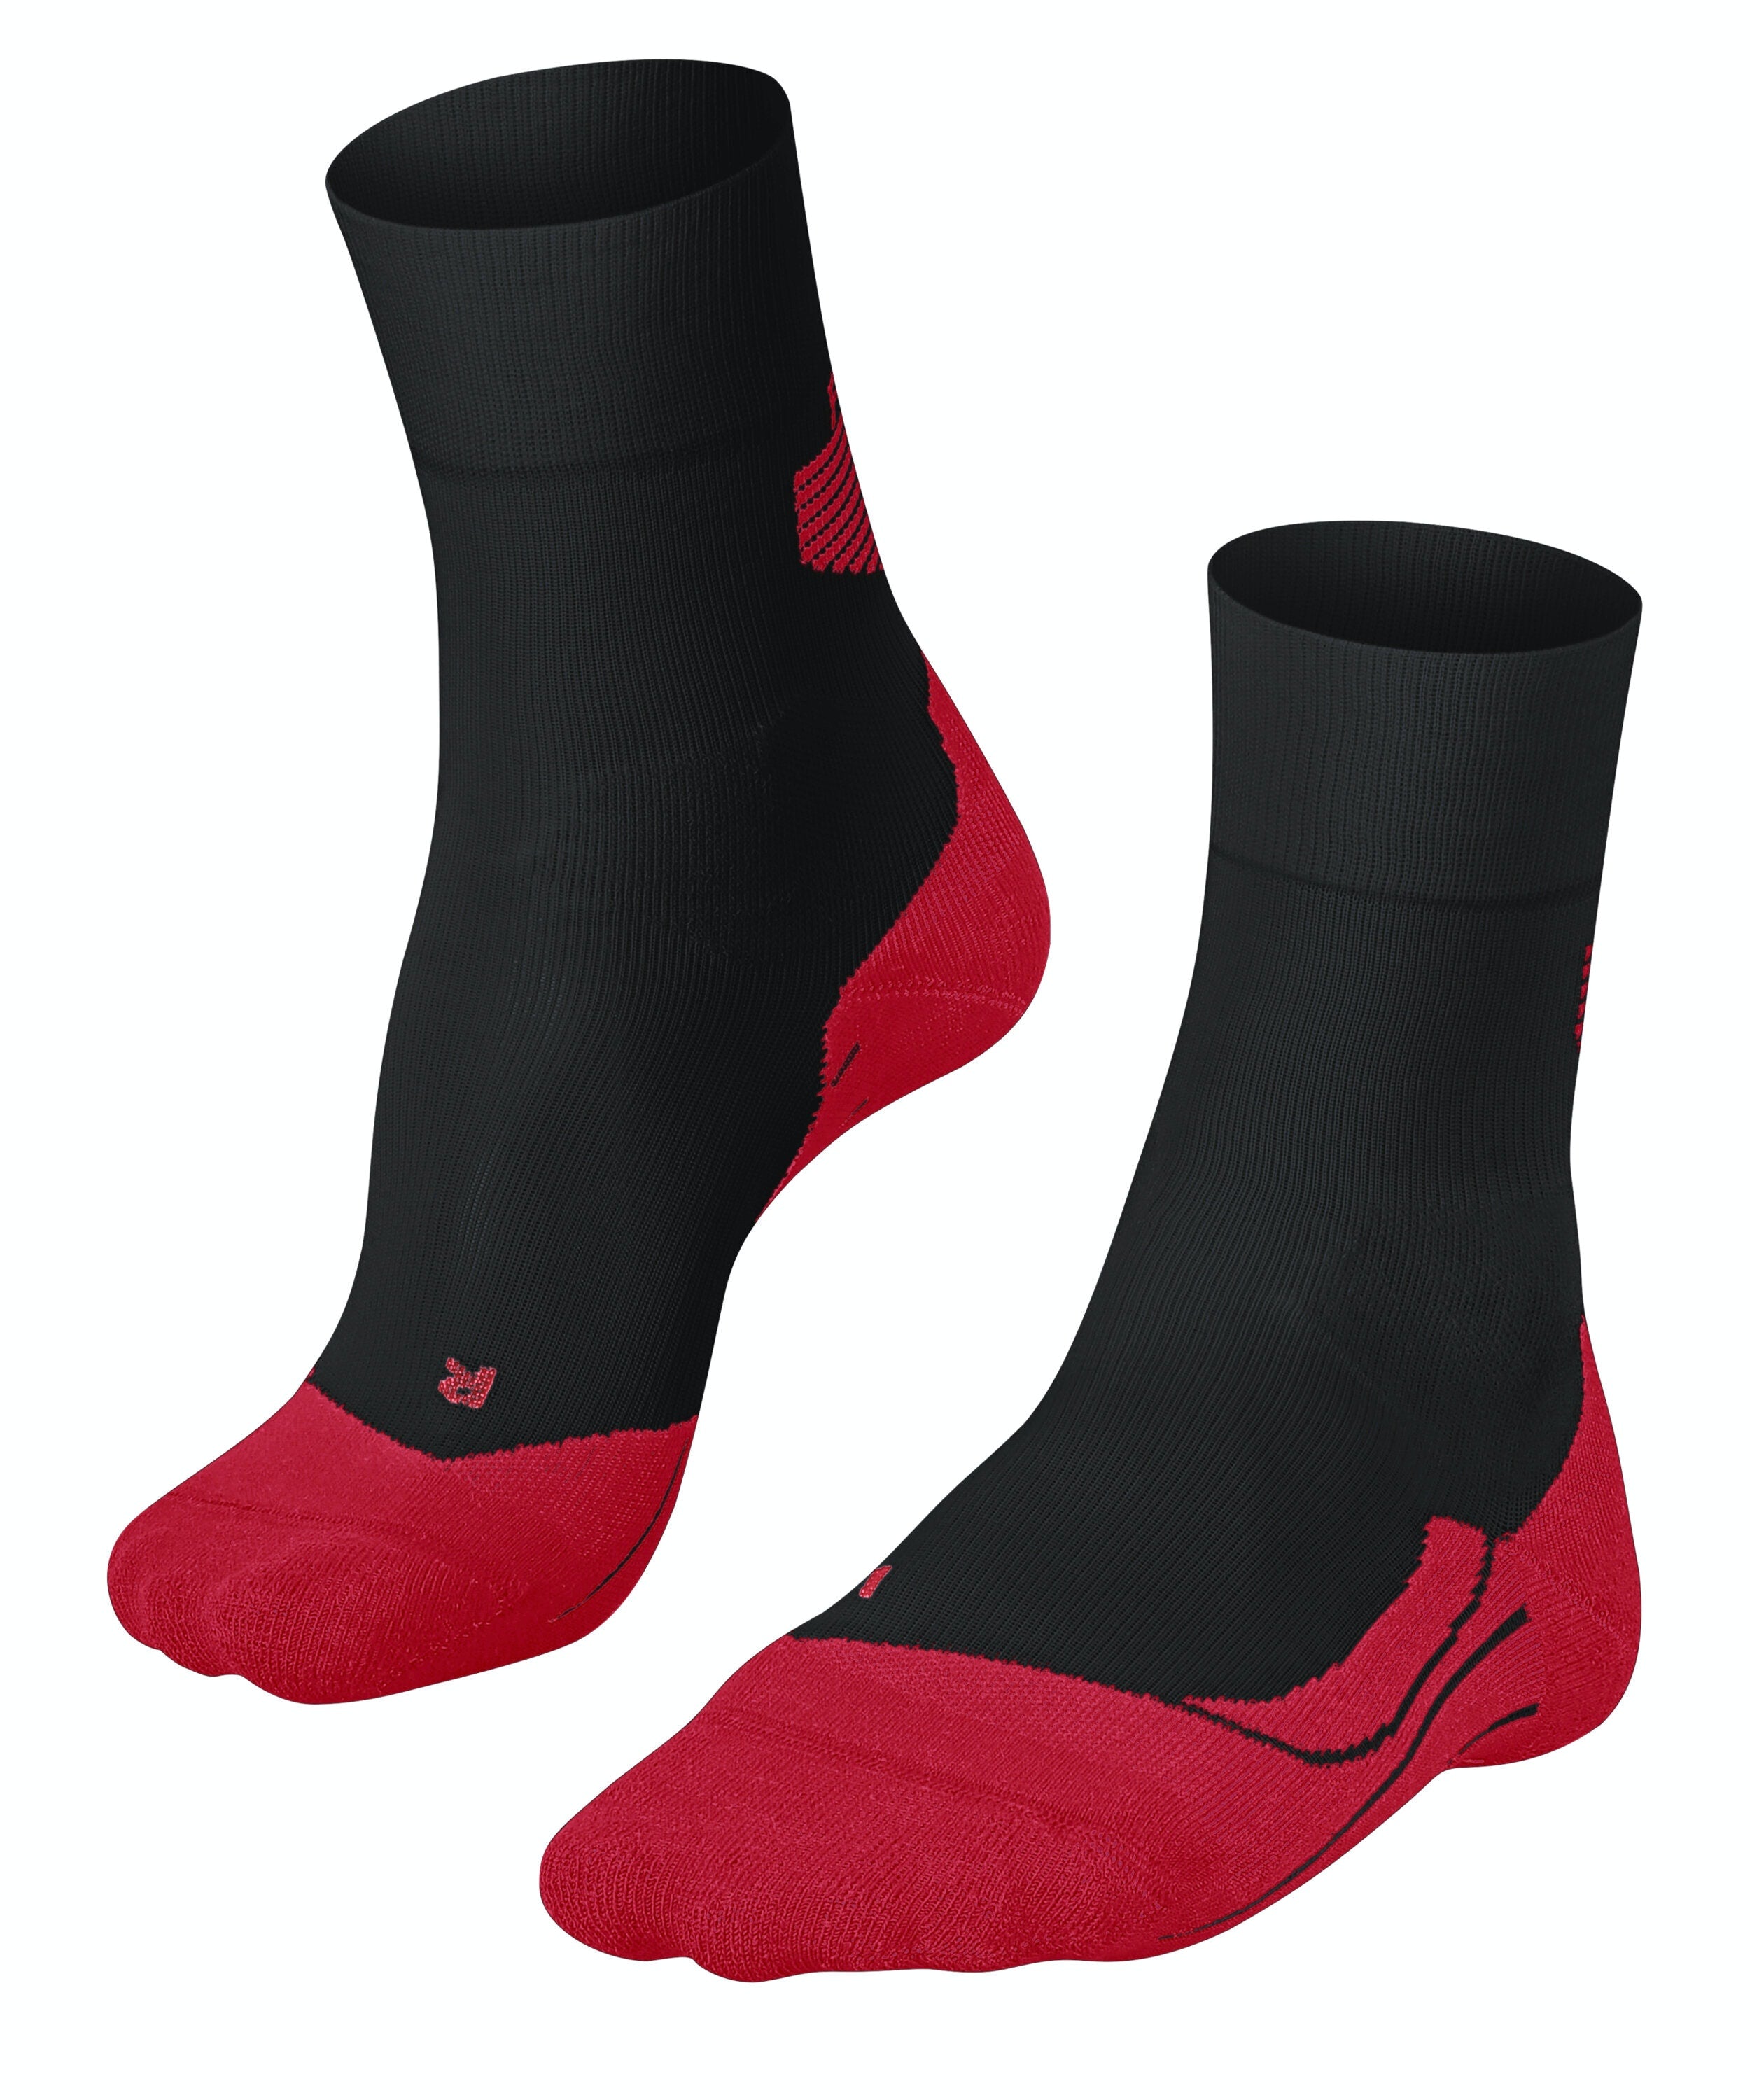 Stabilizing Cool Damen Socken Health